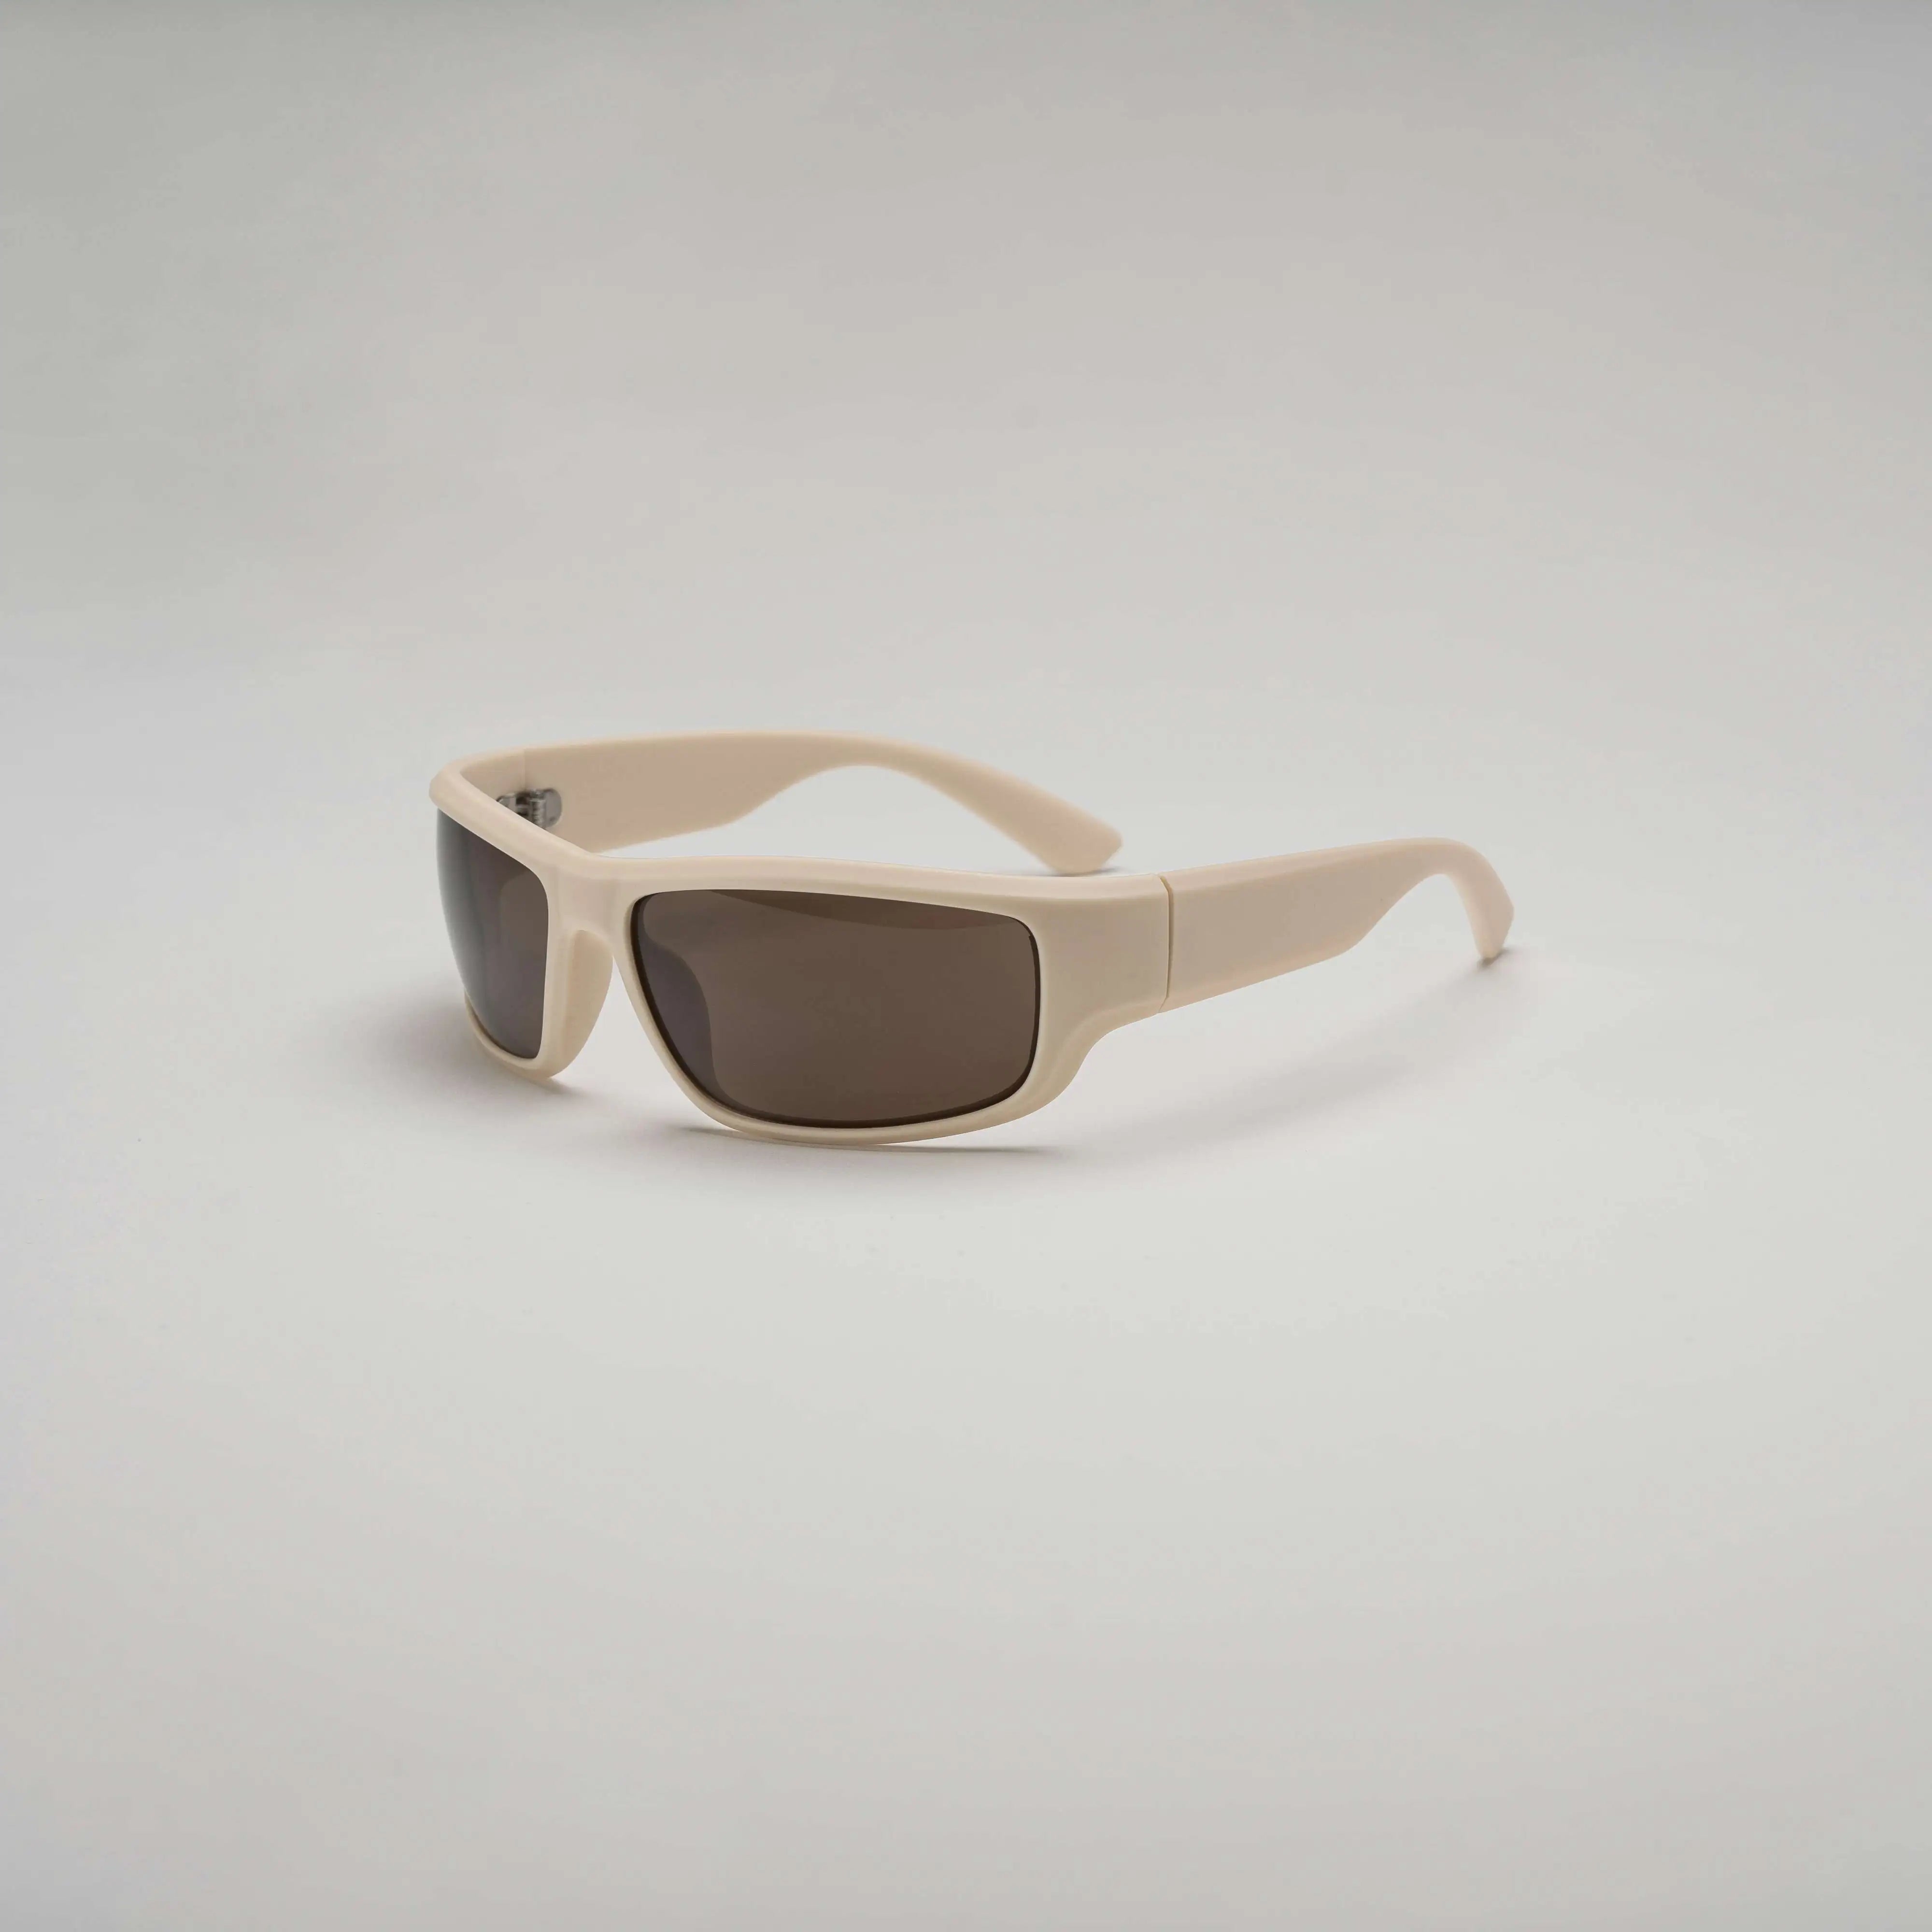 'Warp Drive' Retro Wraparound Sunglasses in Beige & Brown